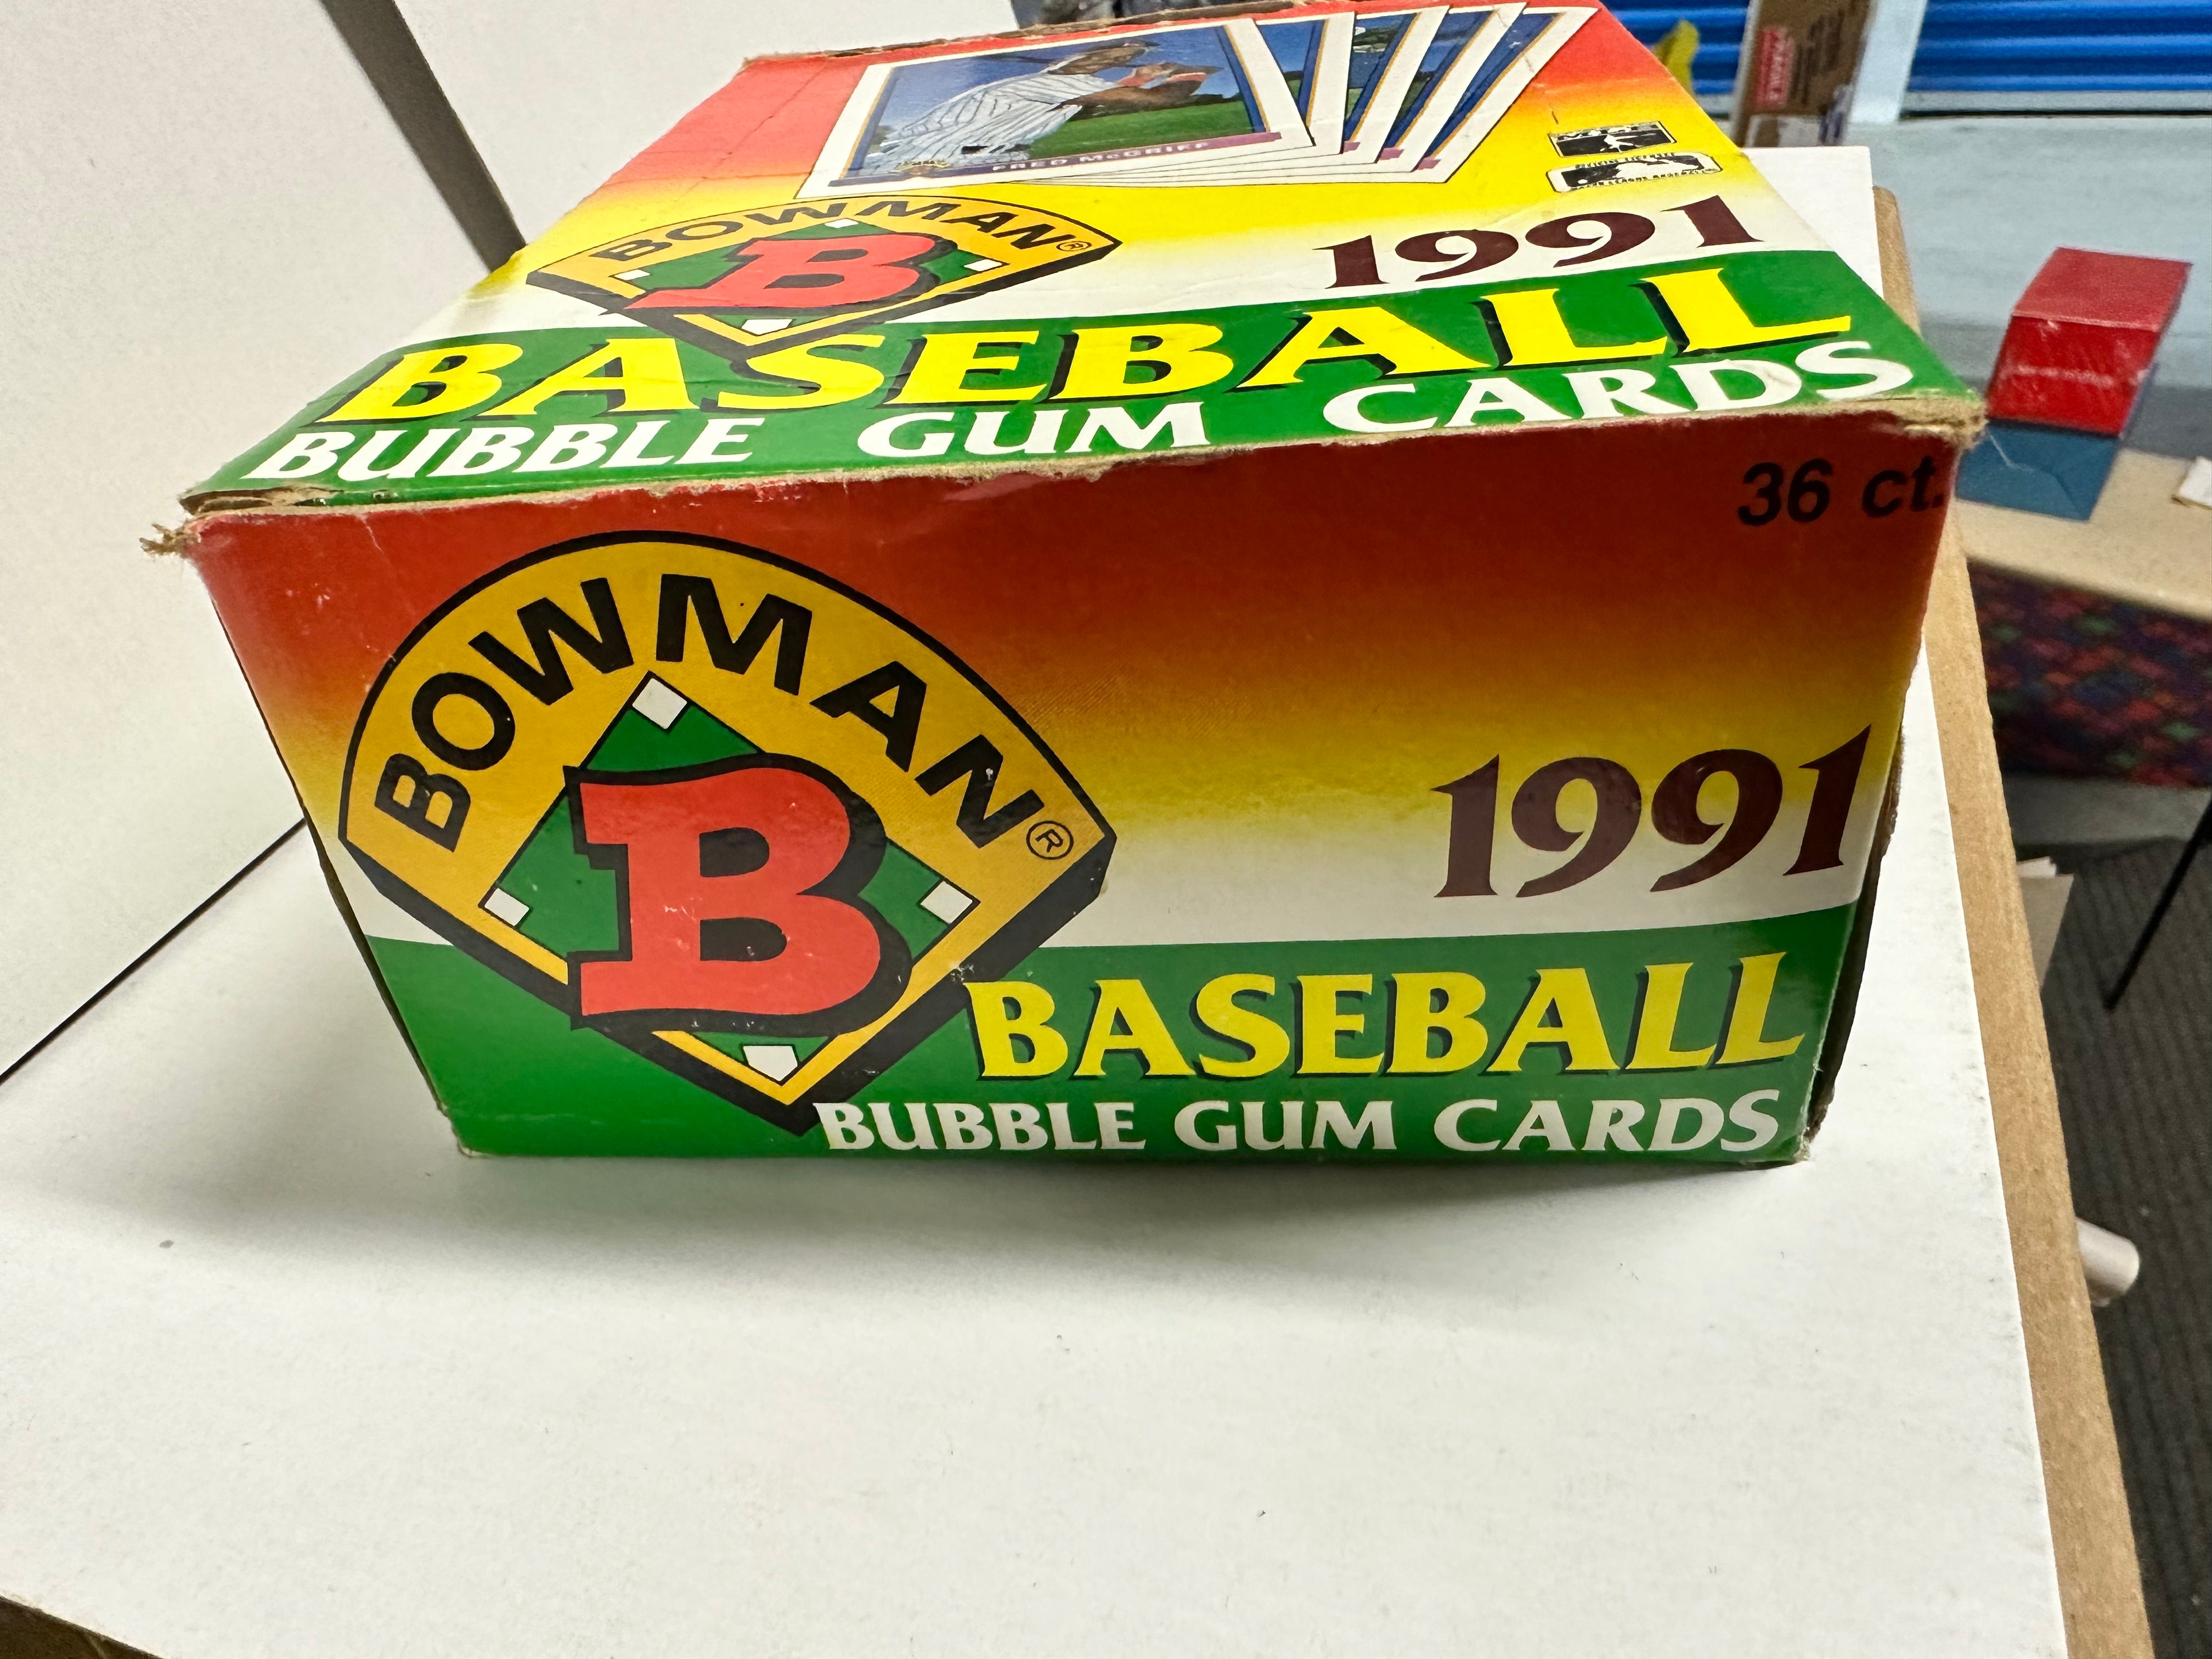 1991 Bowman Baseball cards 36 packs box (Chipper Jones rookies)